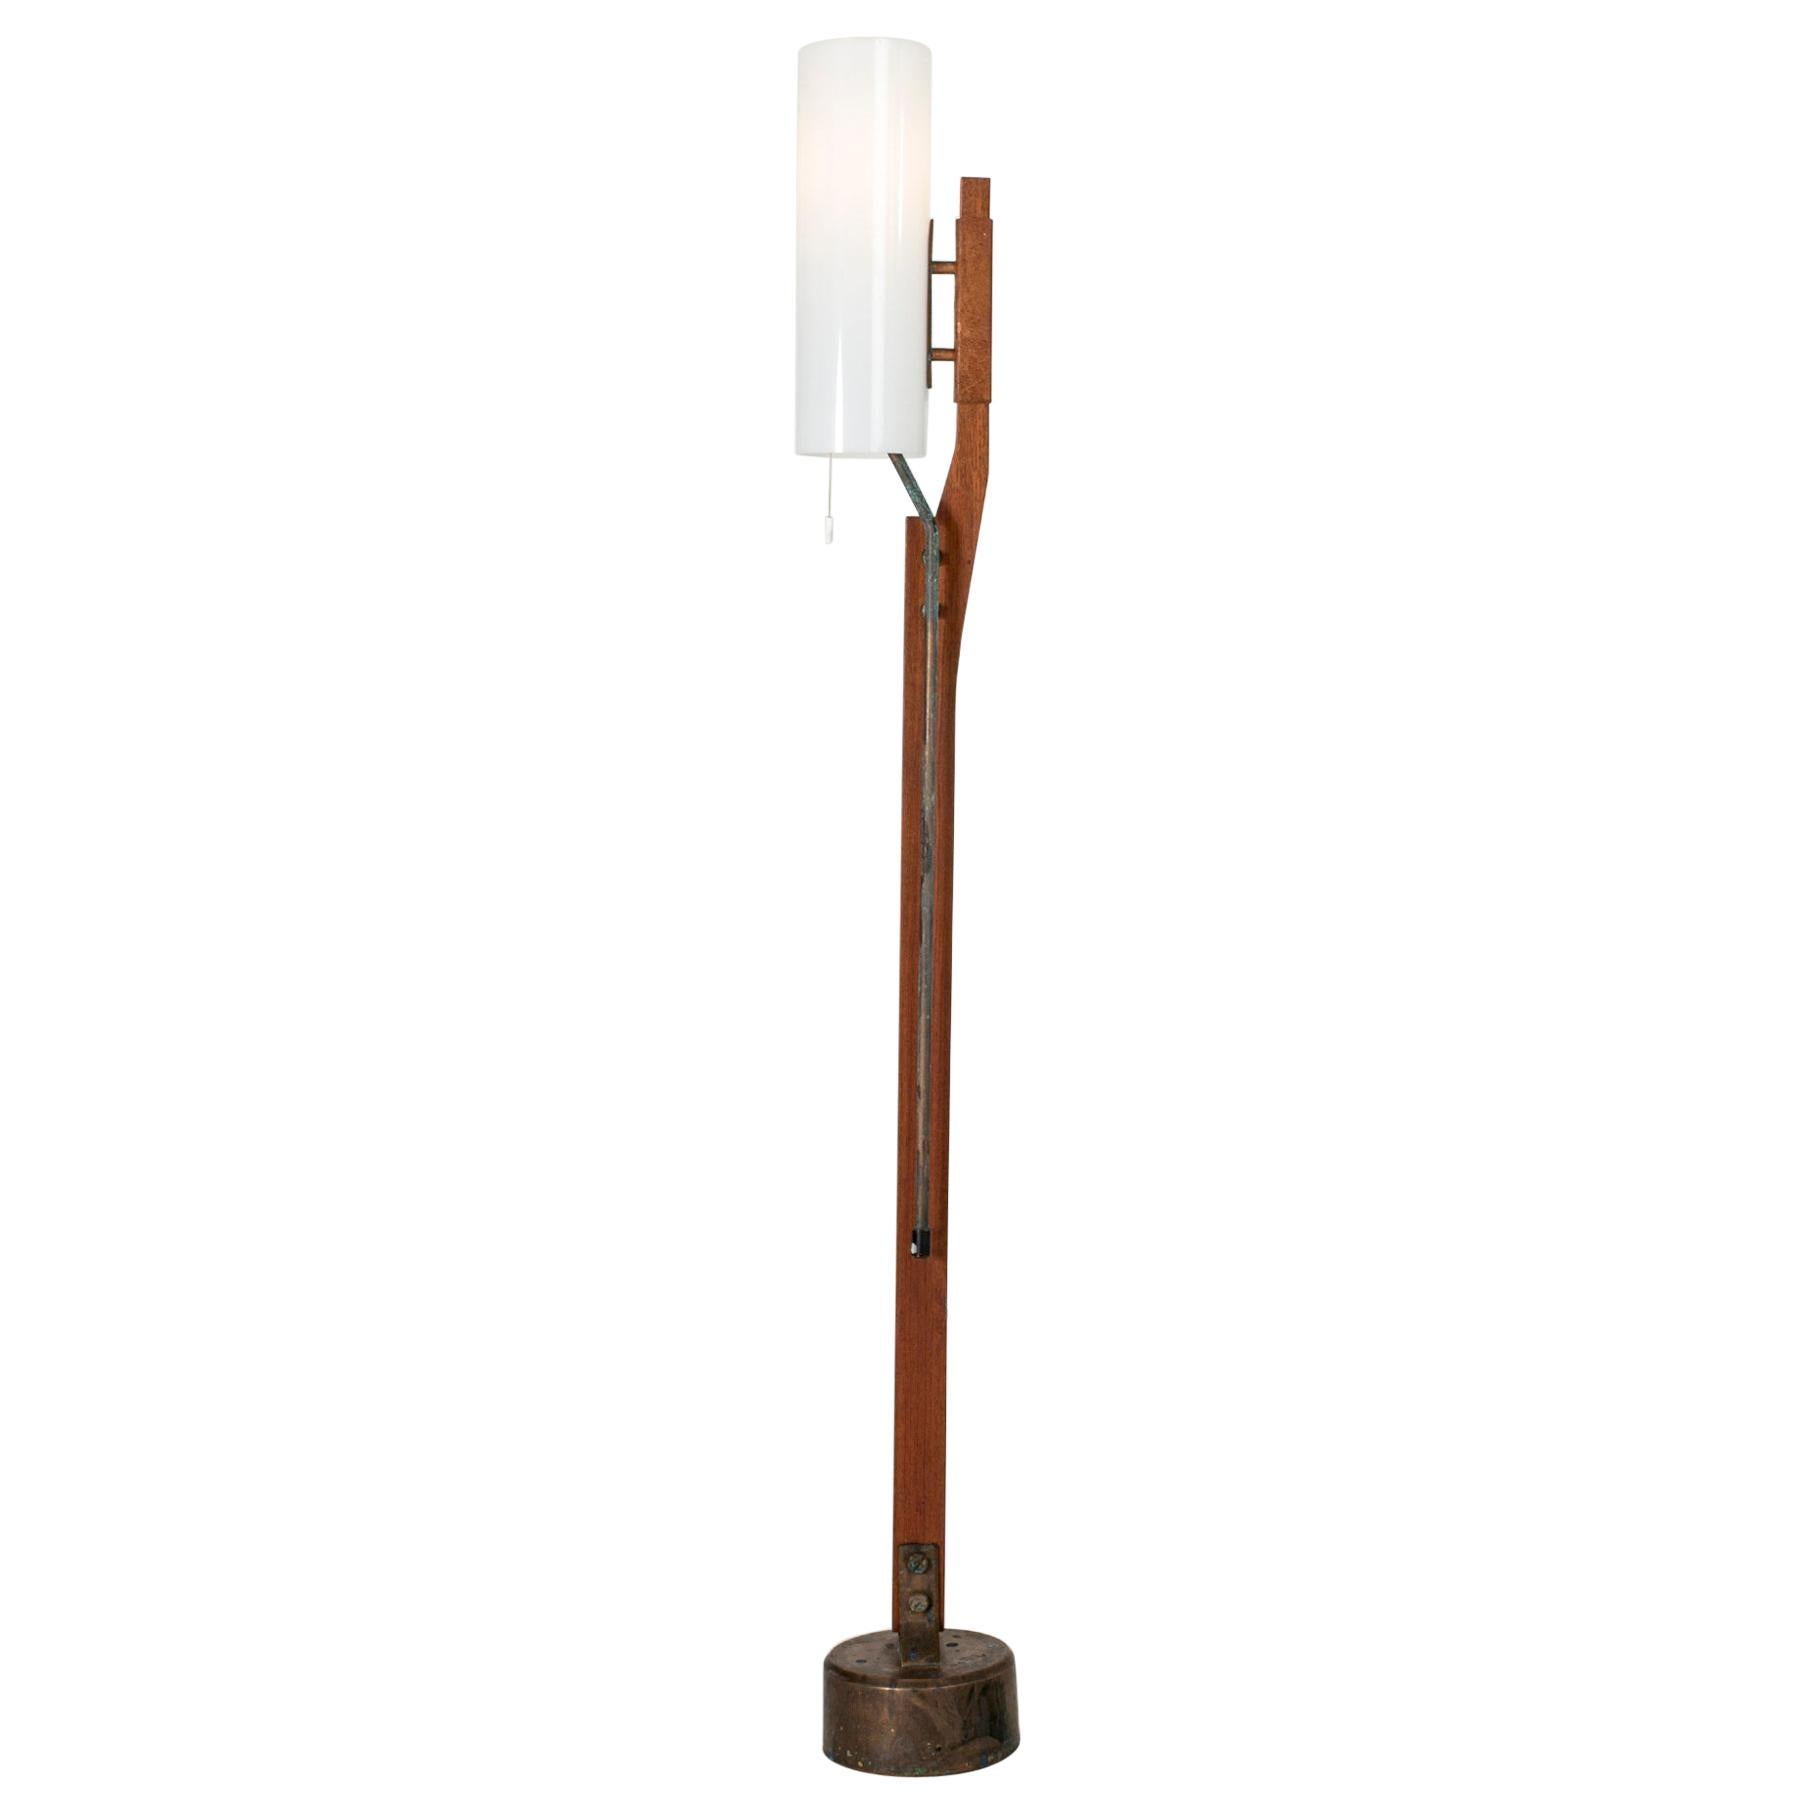 Teak and Copper Floor Lamp from Orrefors